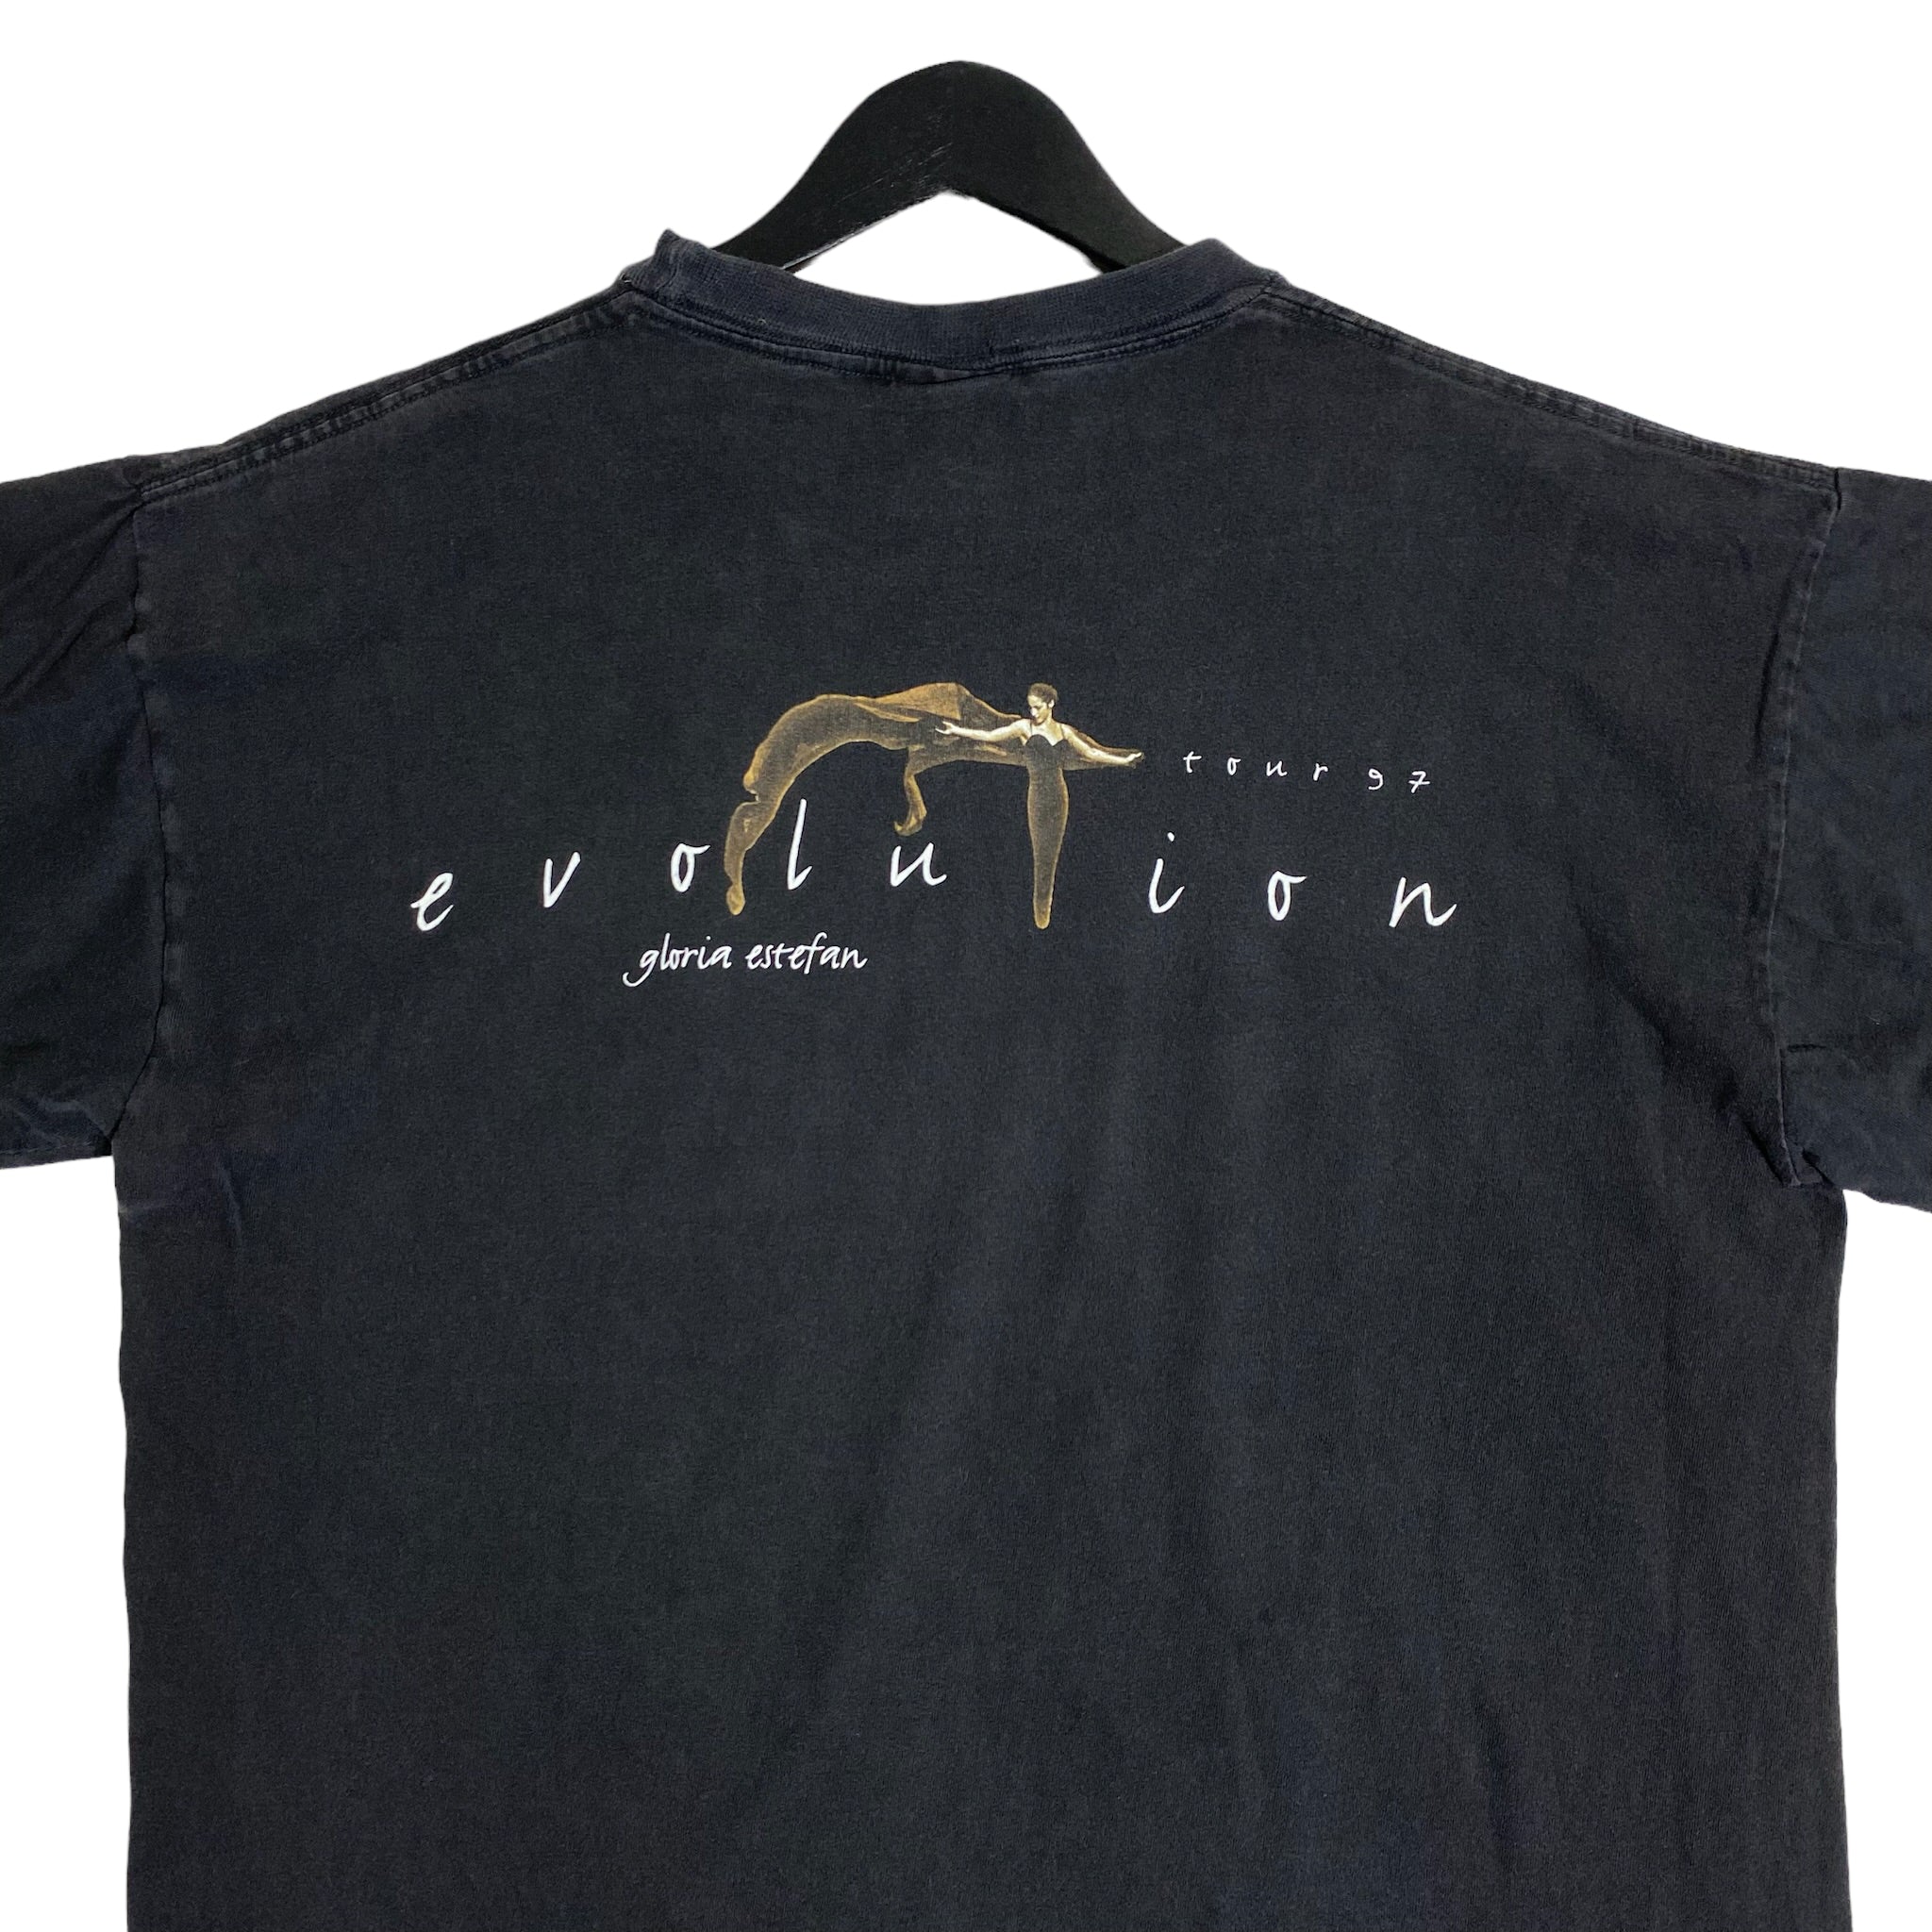 Vintage Gloria Estefan "Evolution Tour" Tee 1996